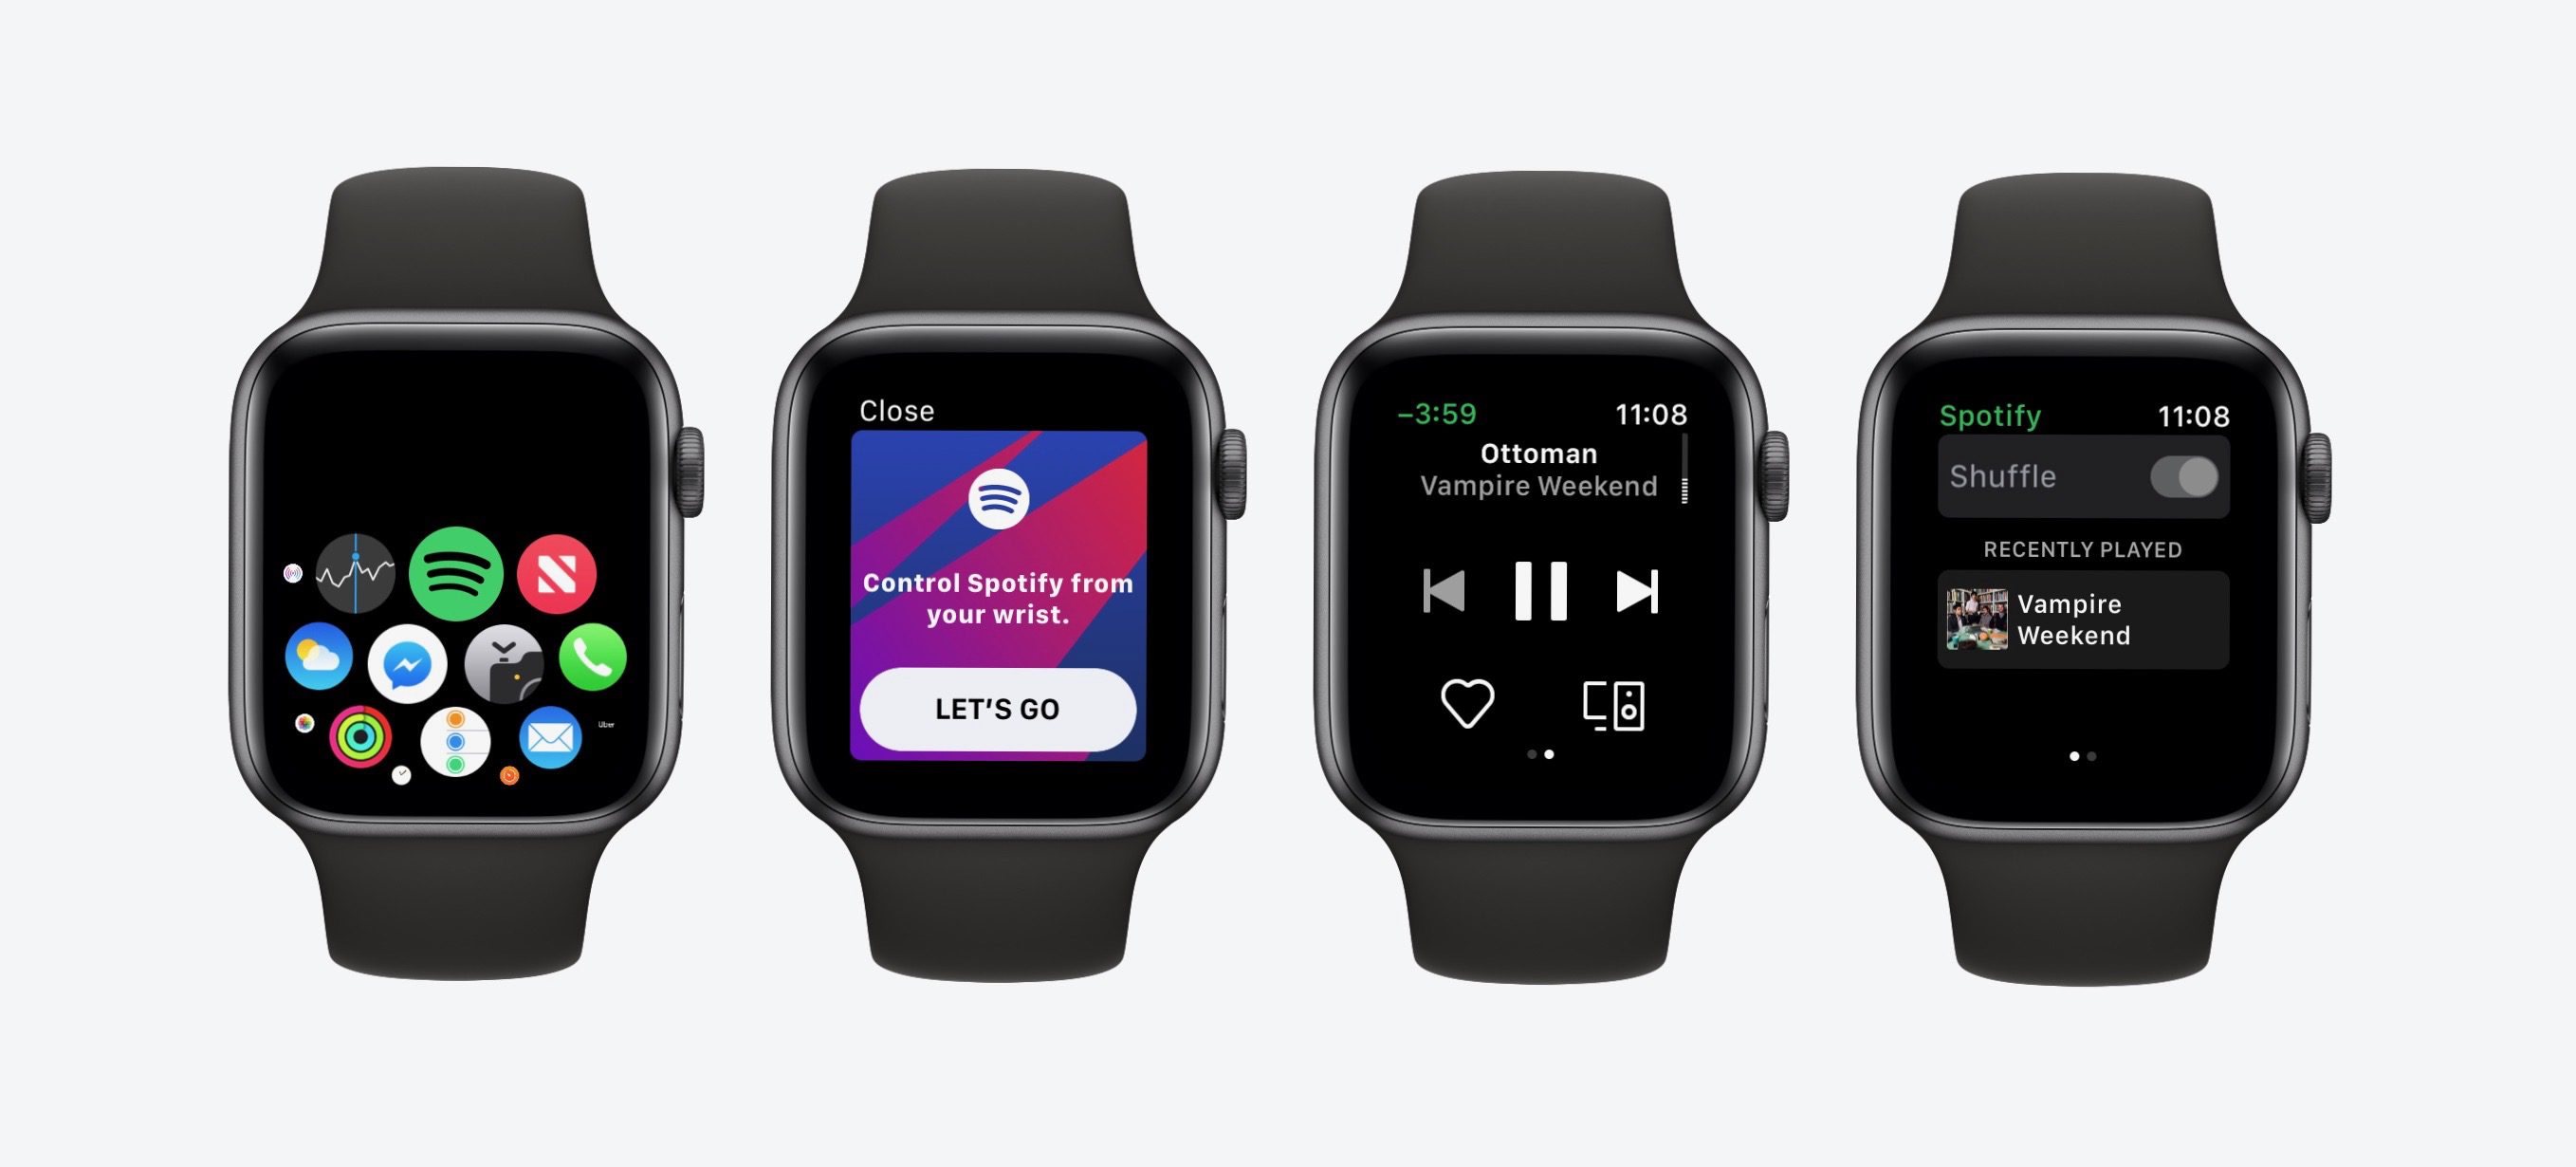 Spotify ganha aplicativo para Apple Watch